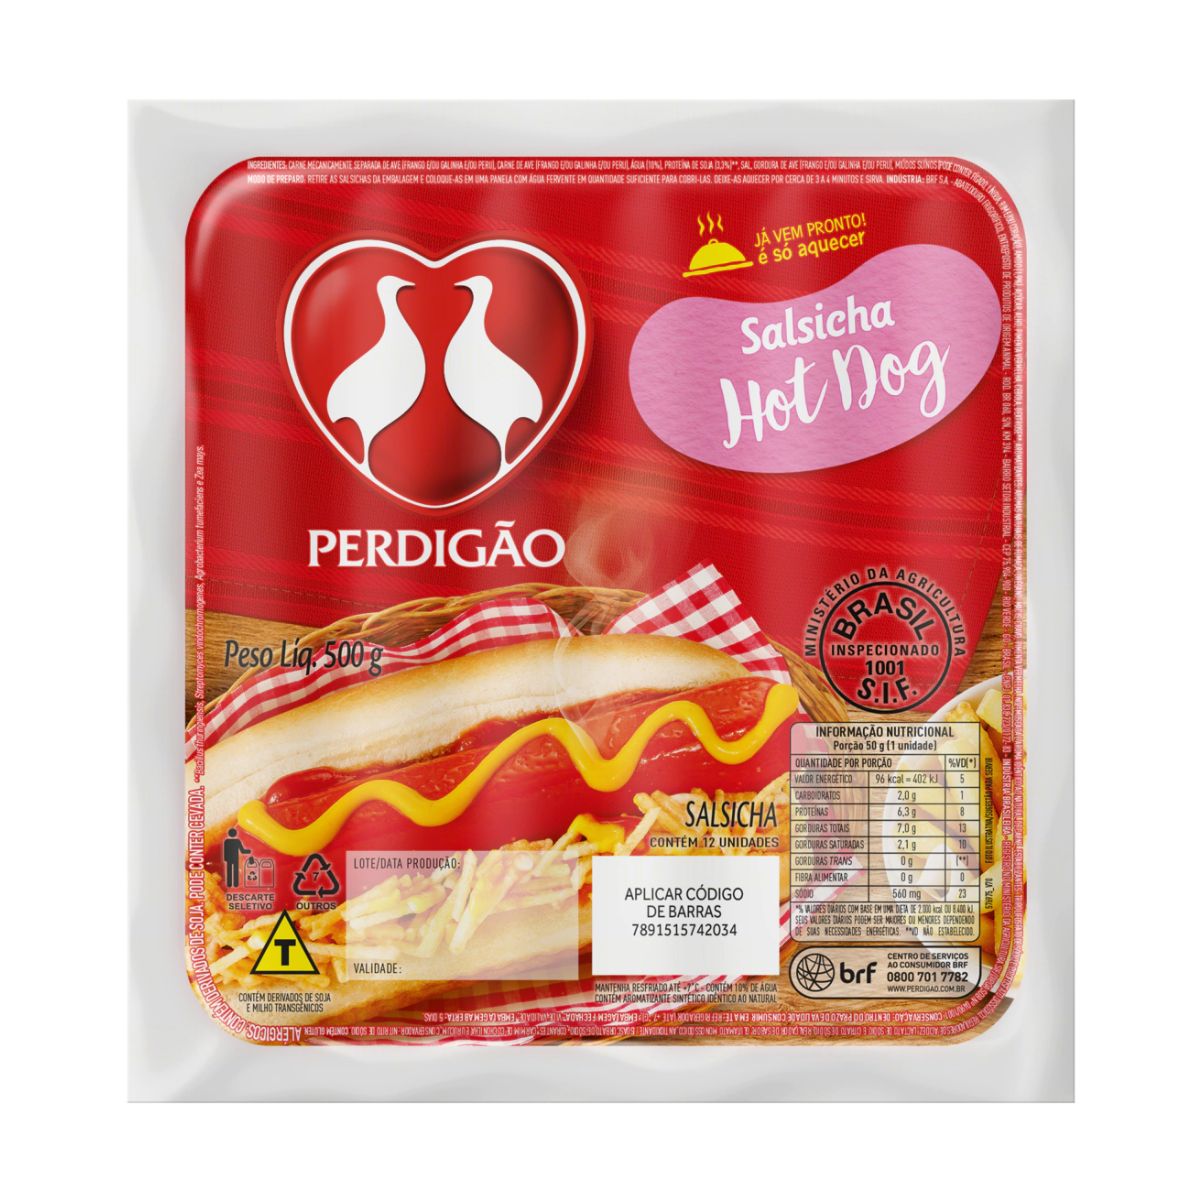 salsicha-hot-dog-perdigao-atend-kg-1.jpg